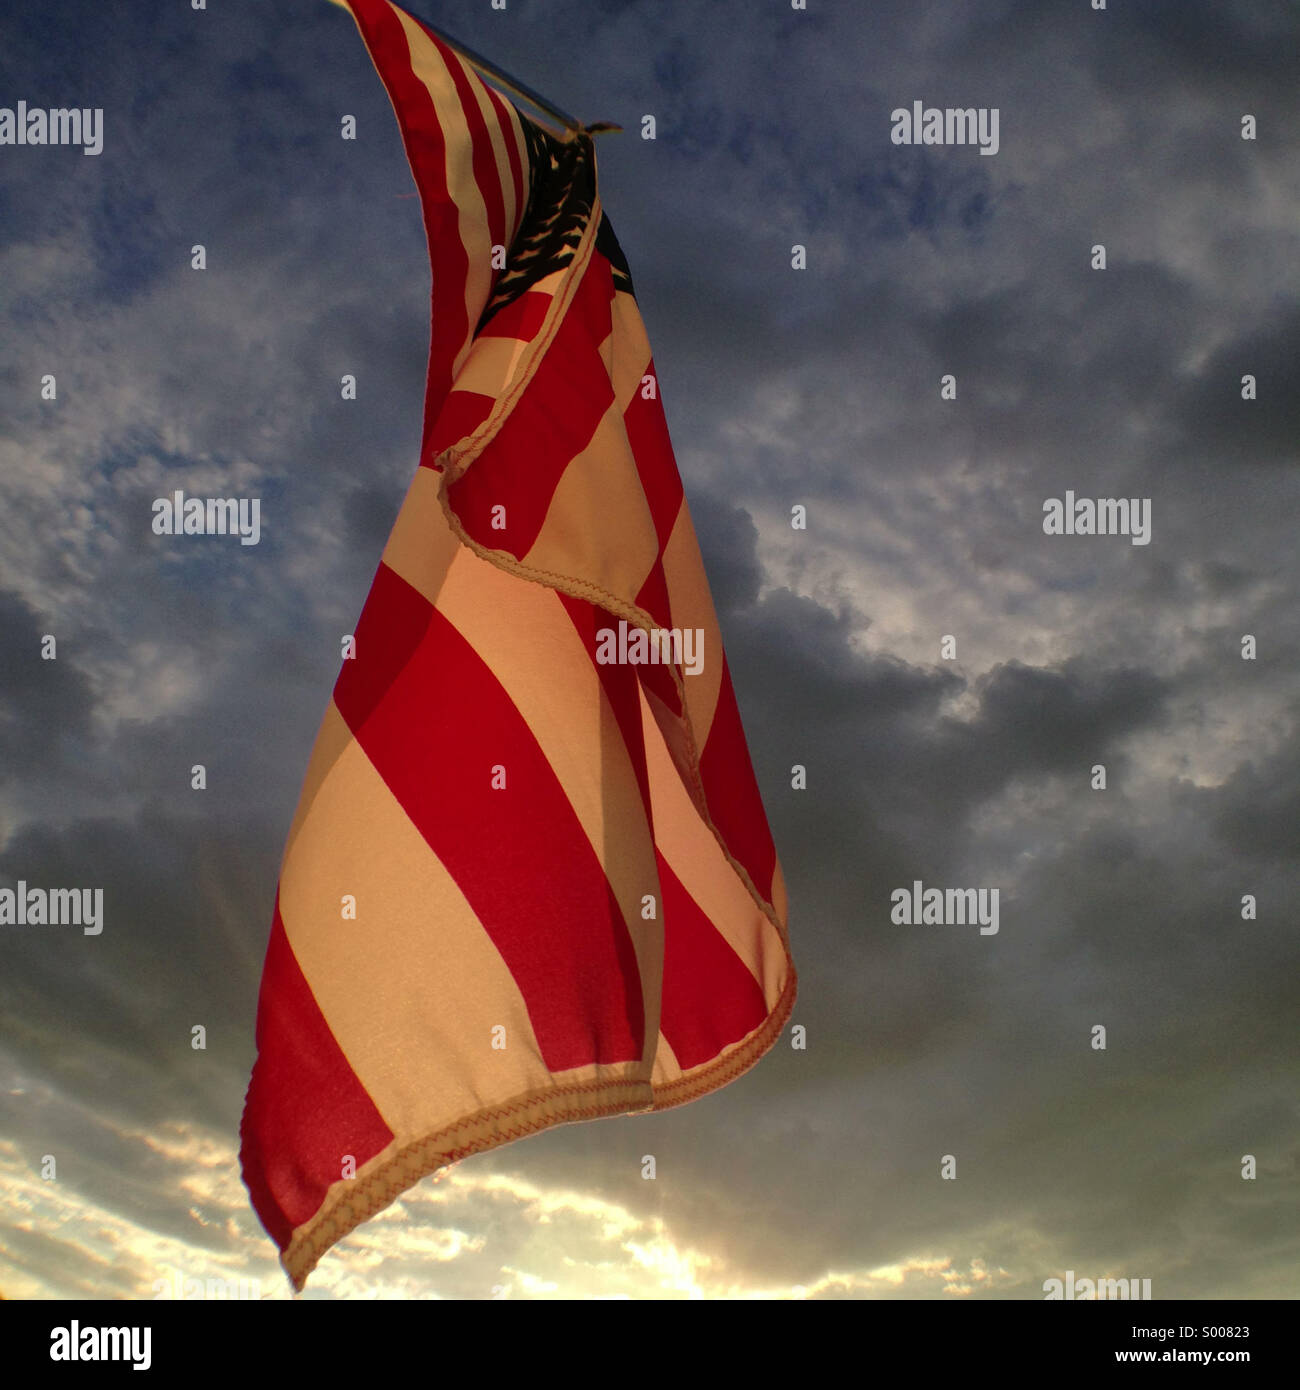 Amerikanische Flagge bei Sonnenuntergang Stockfoto